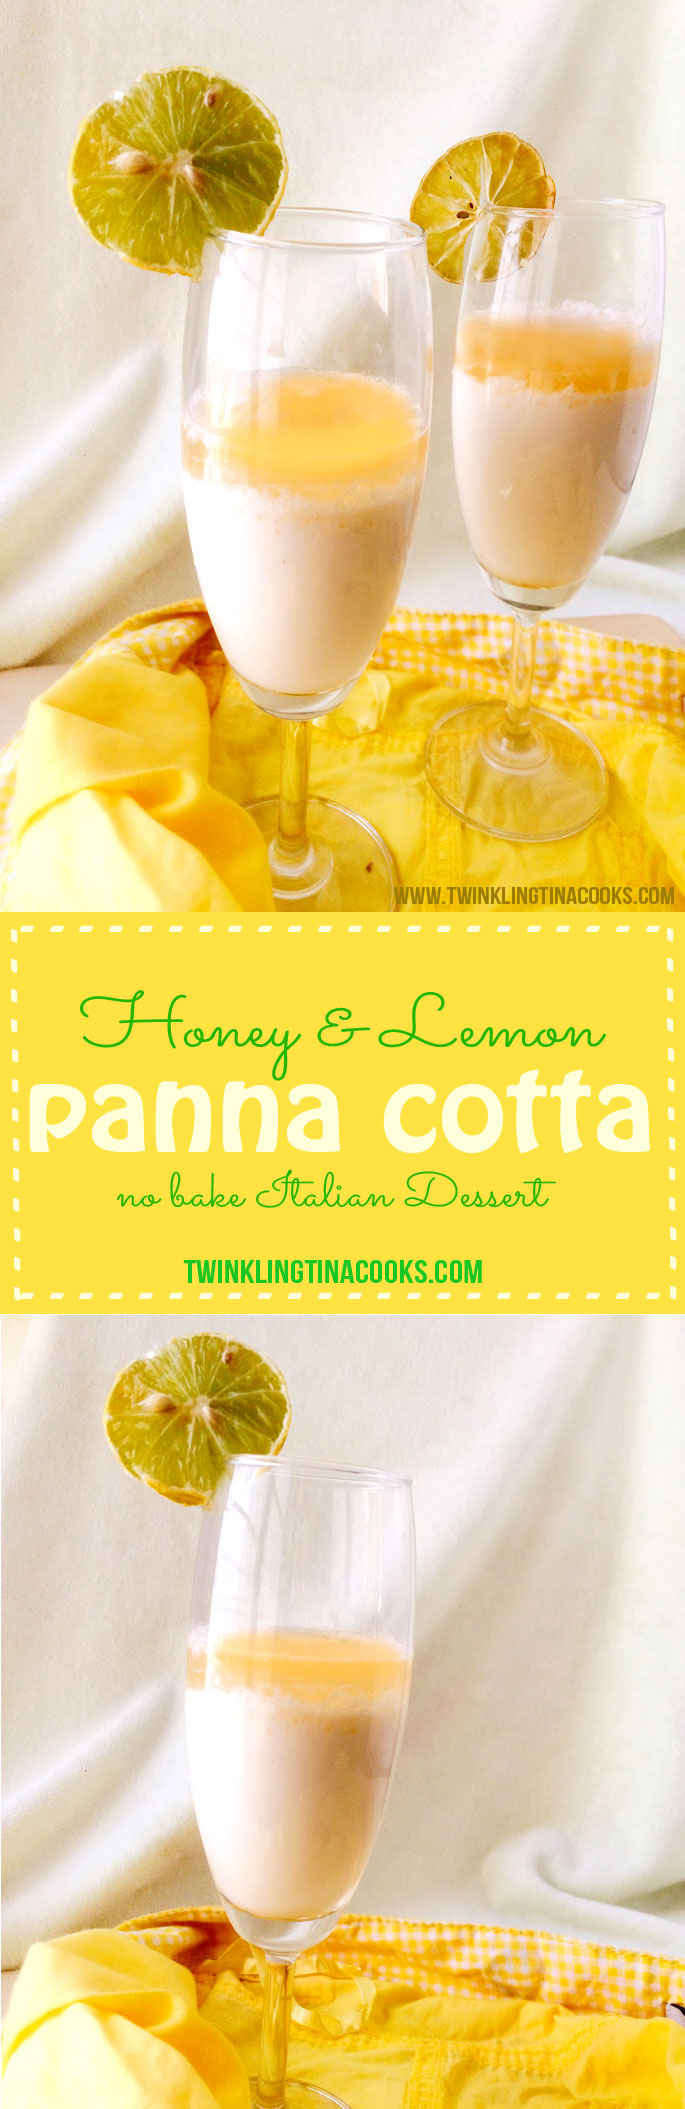 honey-lemon-panna-cotta-italian-dessert-pin